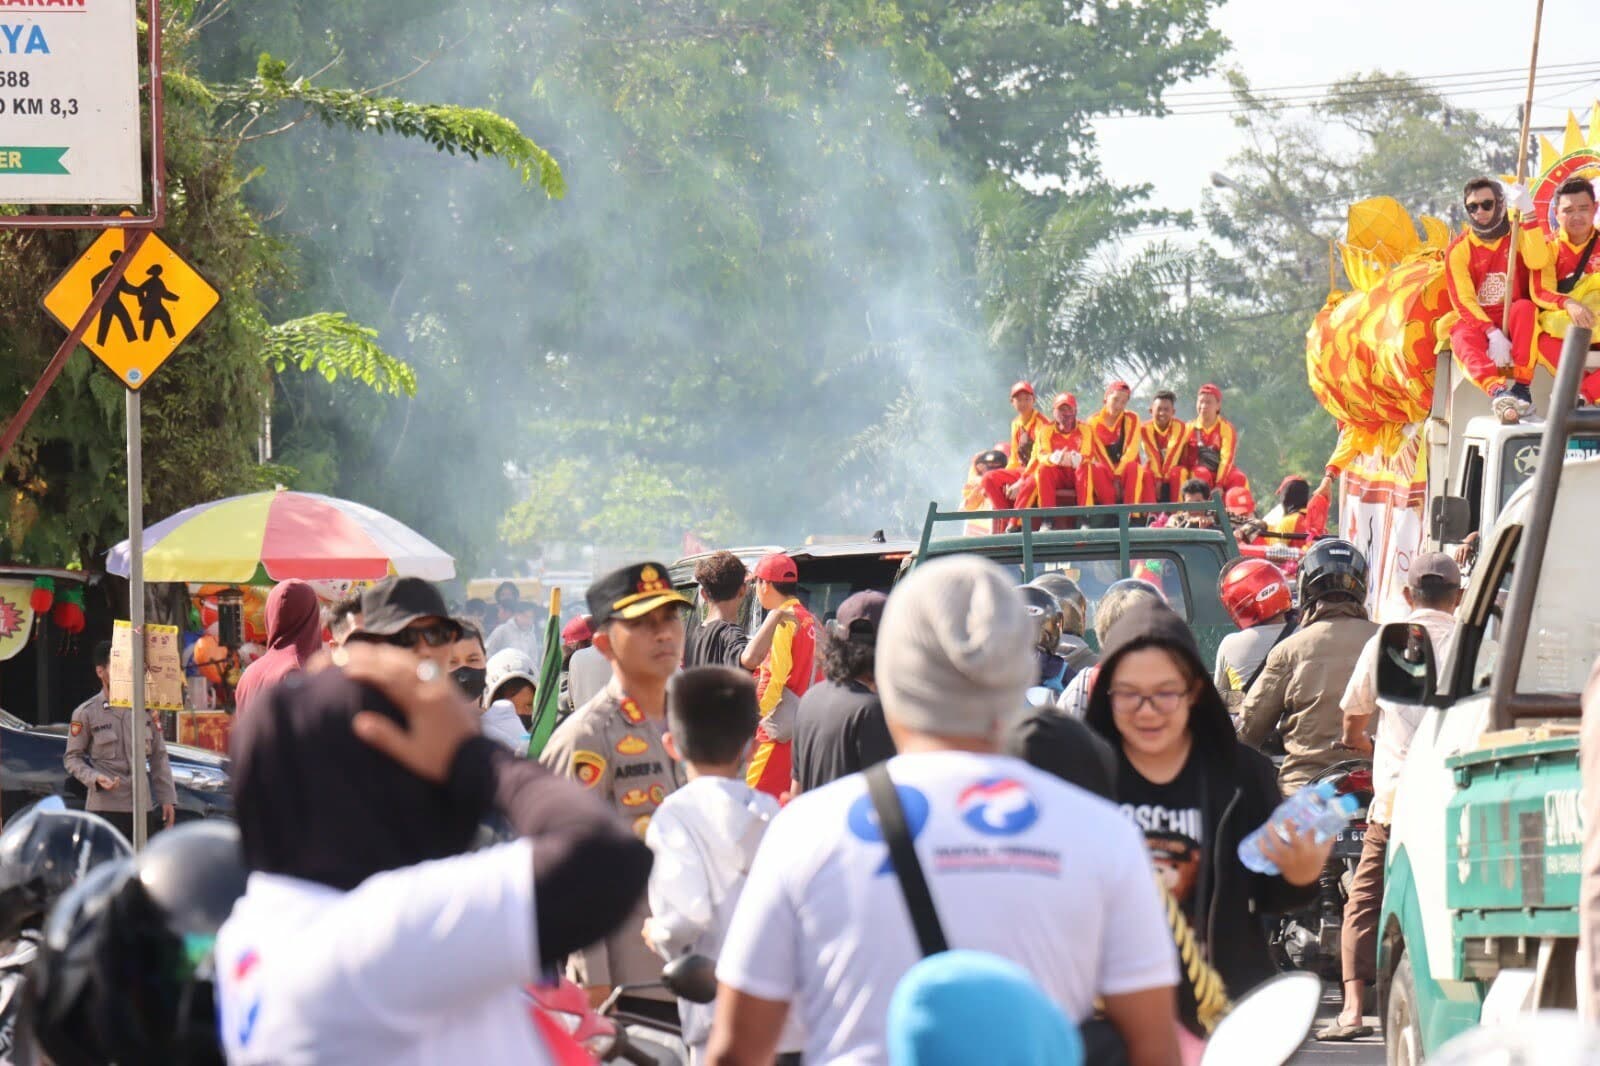 Kapolres Kubu Raya, AKBP Arief Hidayat memantau langsung jalannya prosesi ritual pembakaran naga di Yayasan Bhakti Suci. (Foto: Jauhari)